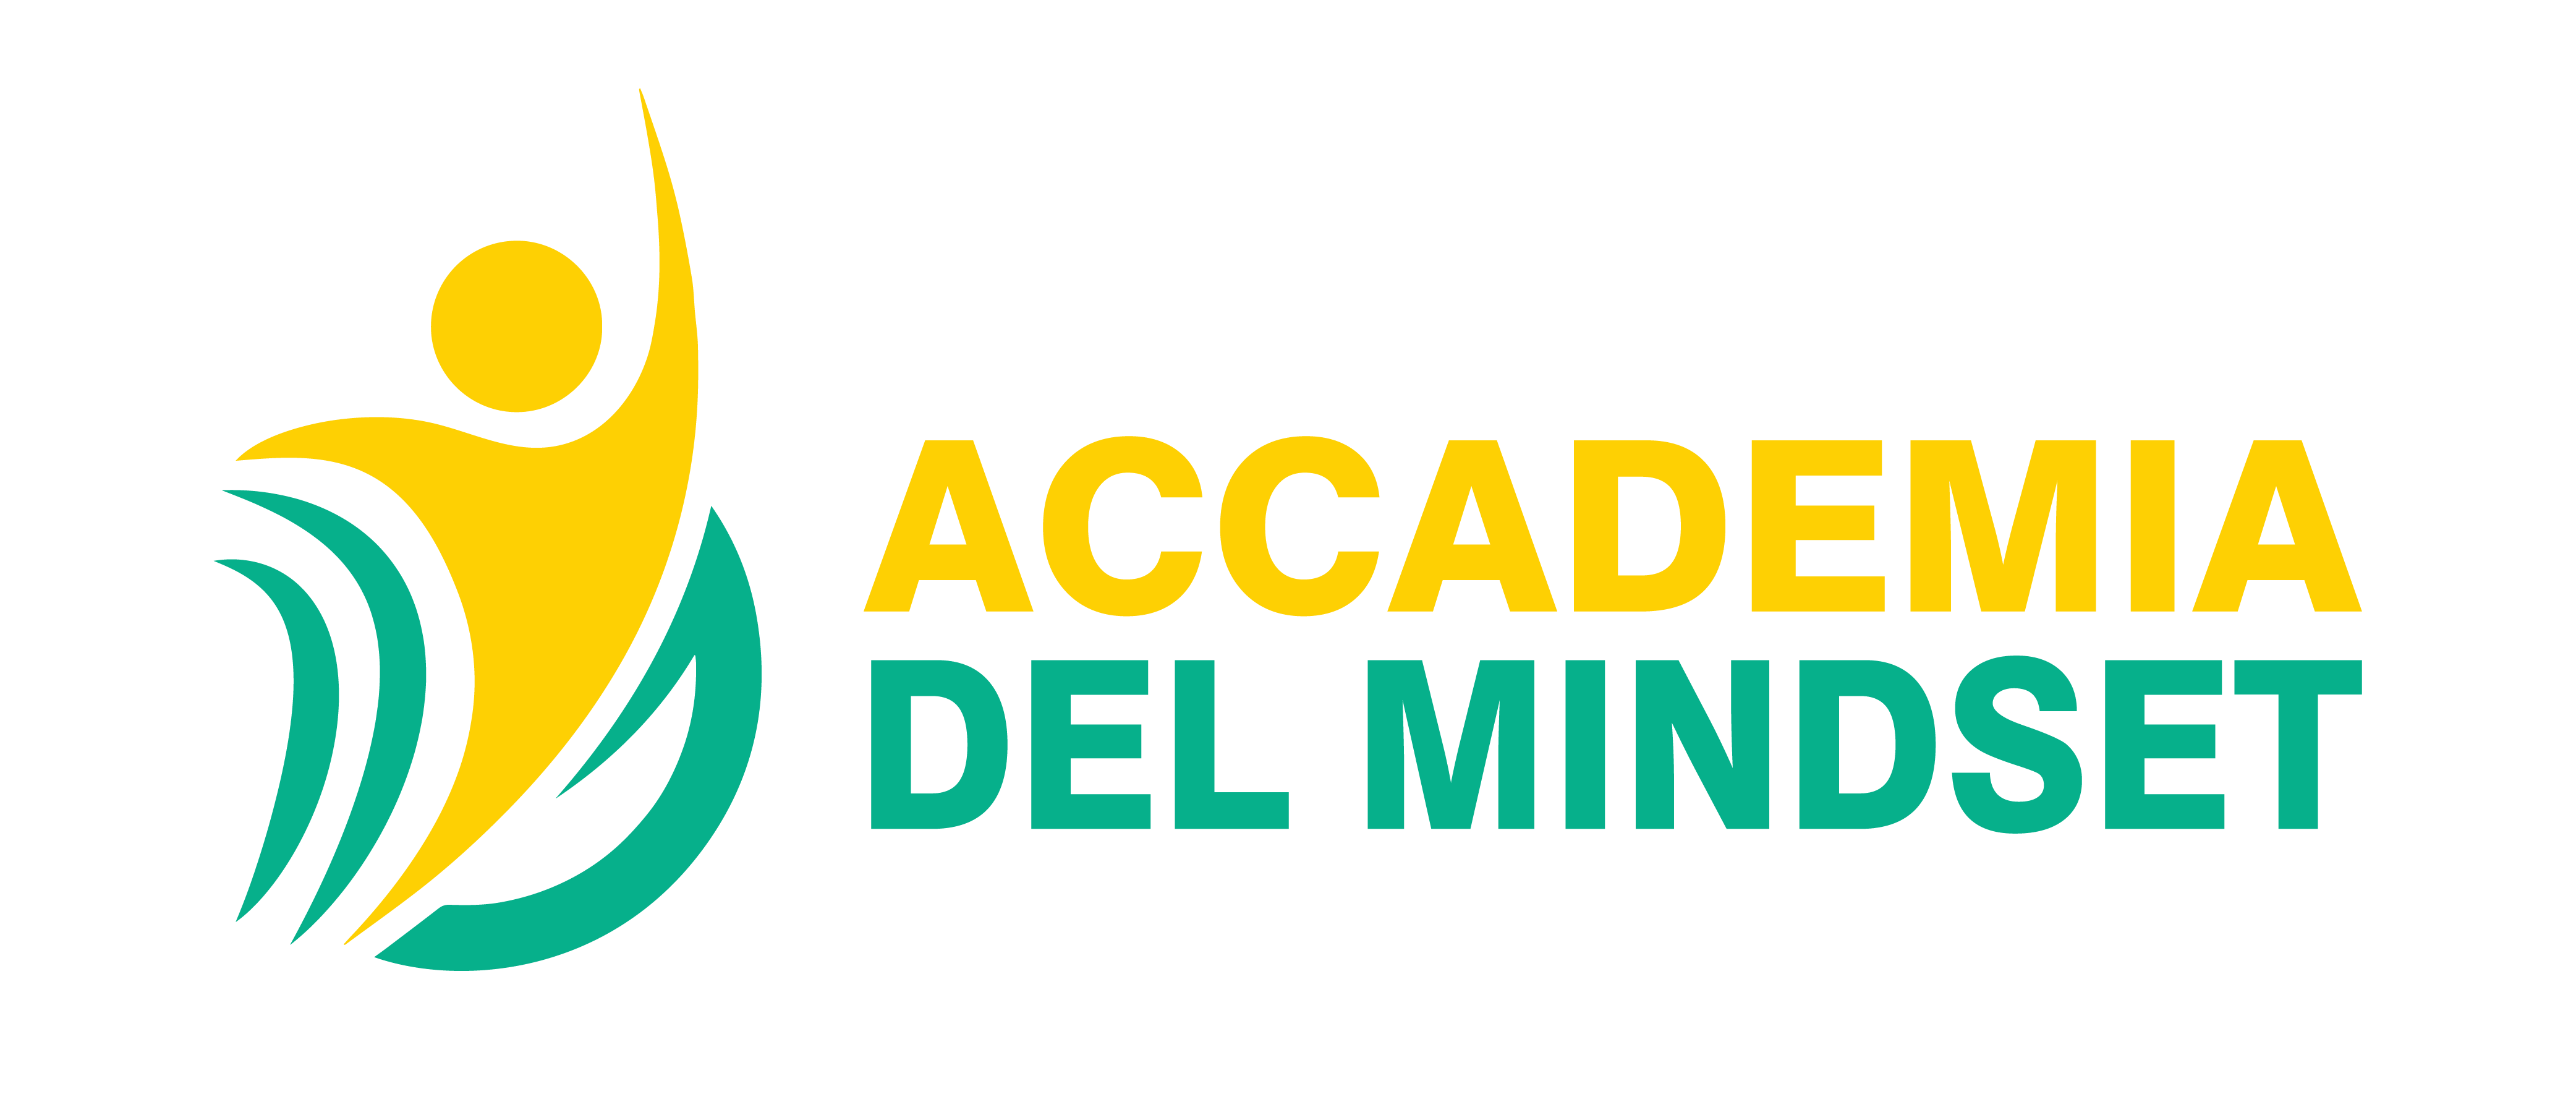 Accademia del Mindset